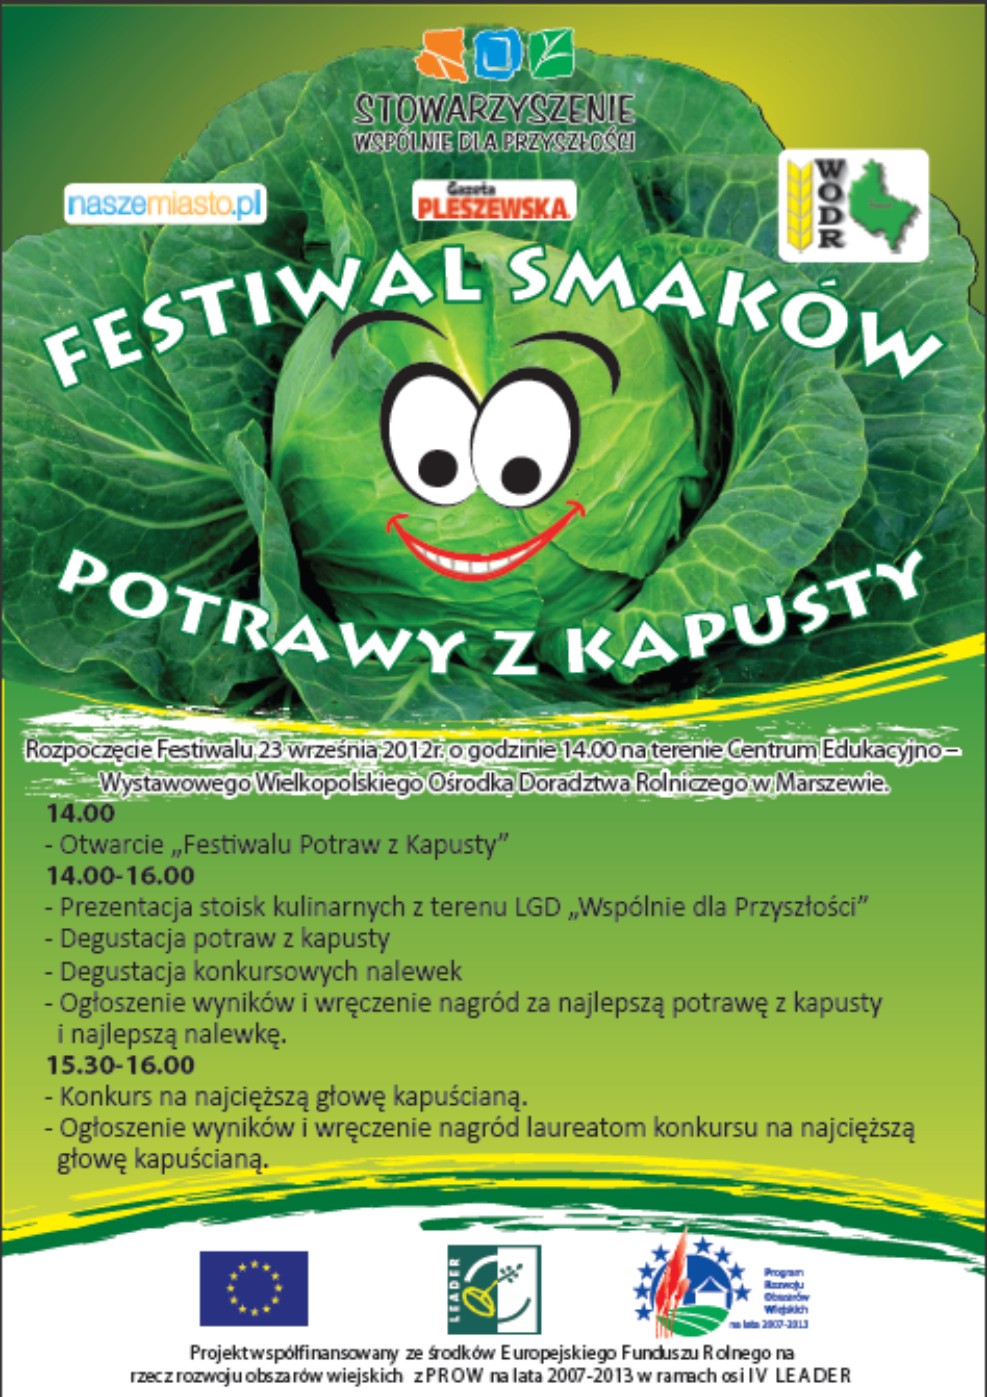 plakat - festiwal smakow